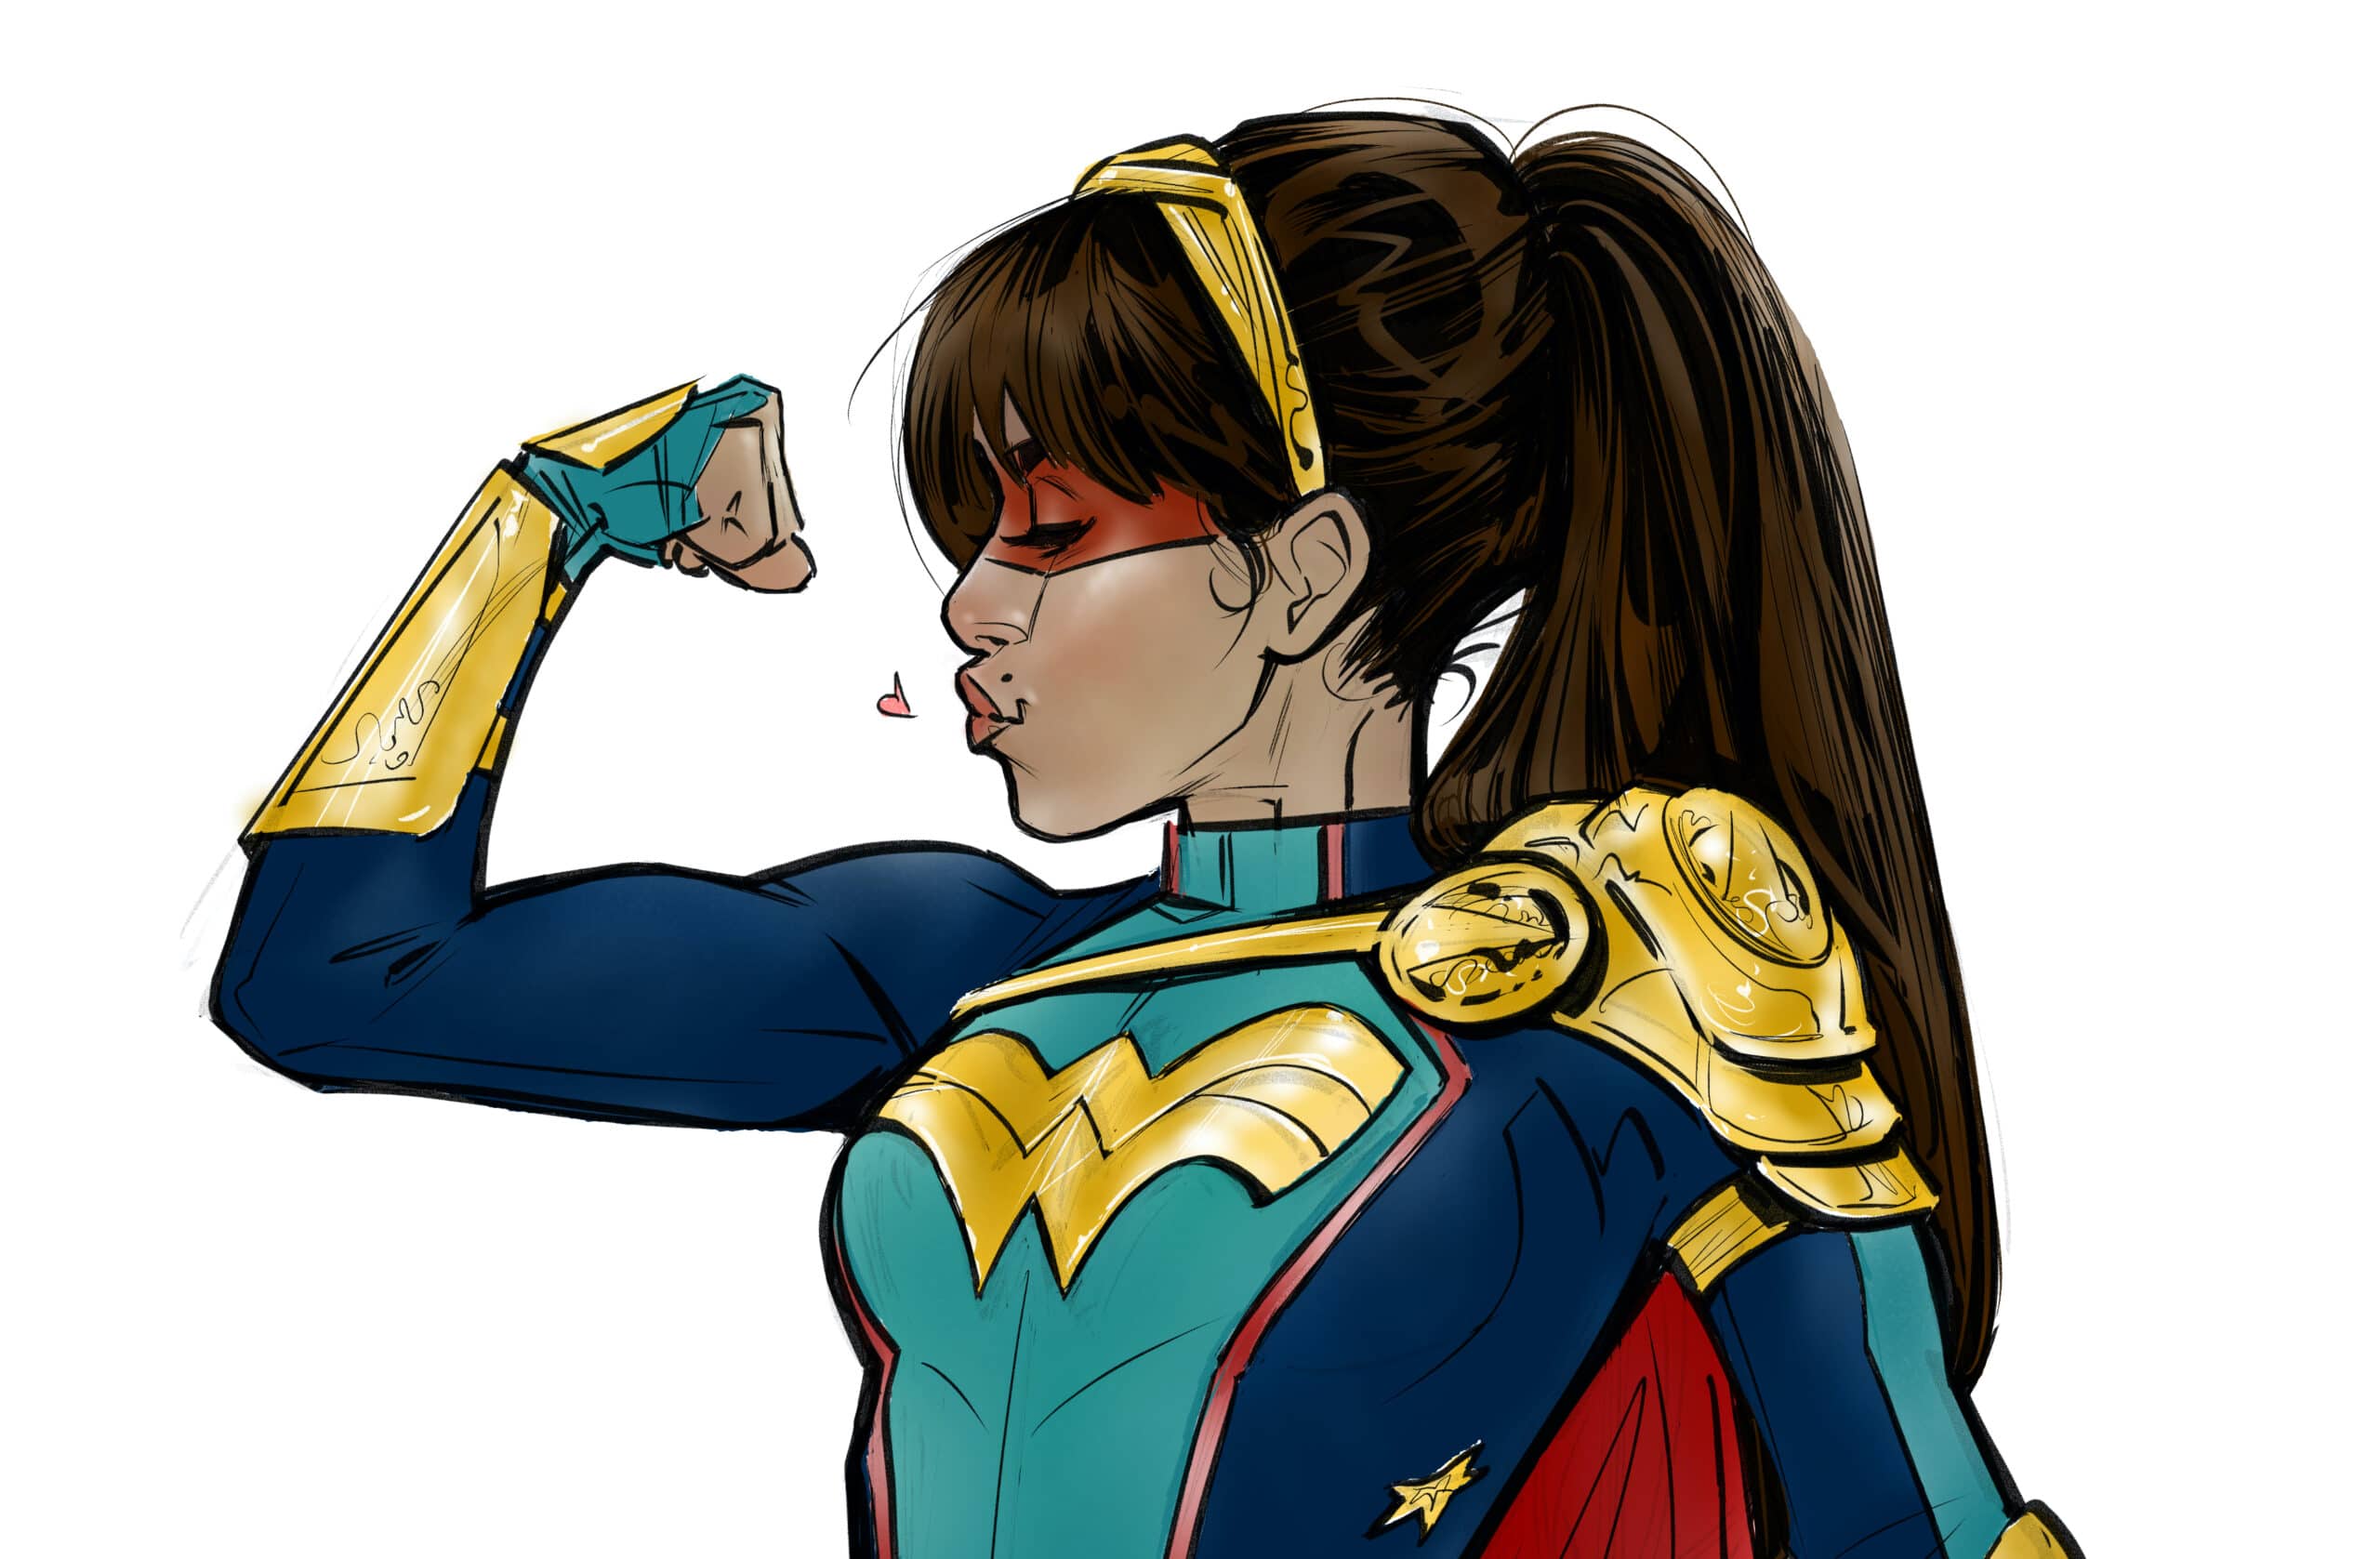 Yara Flor as Wonder Girl